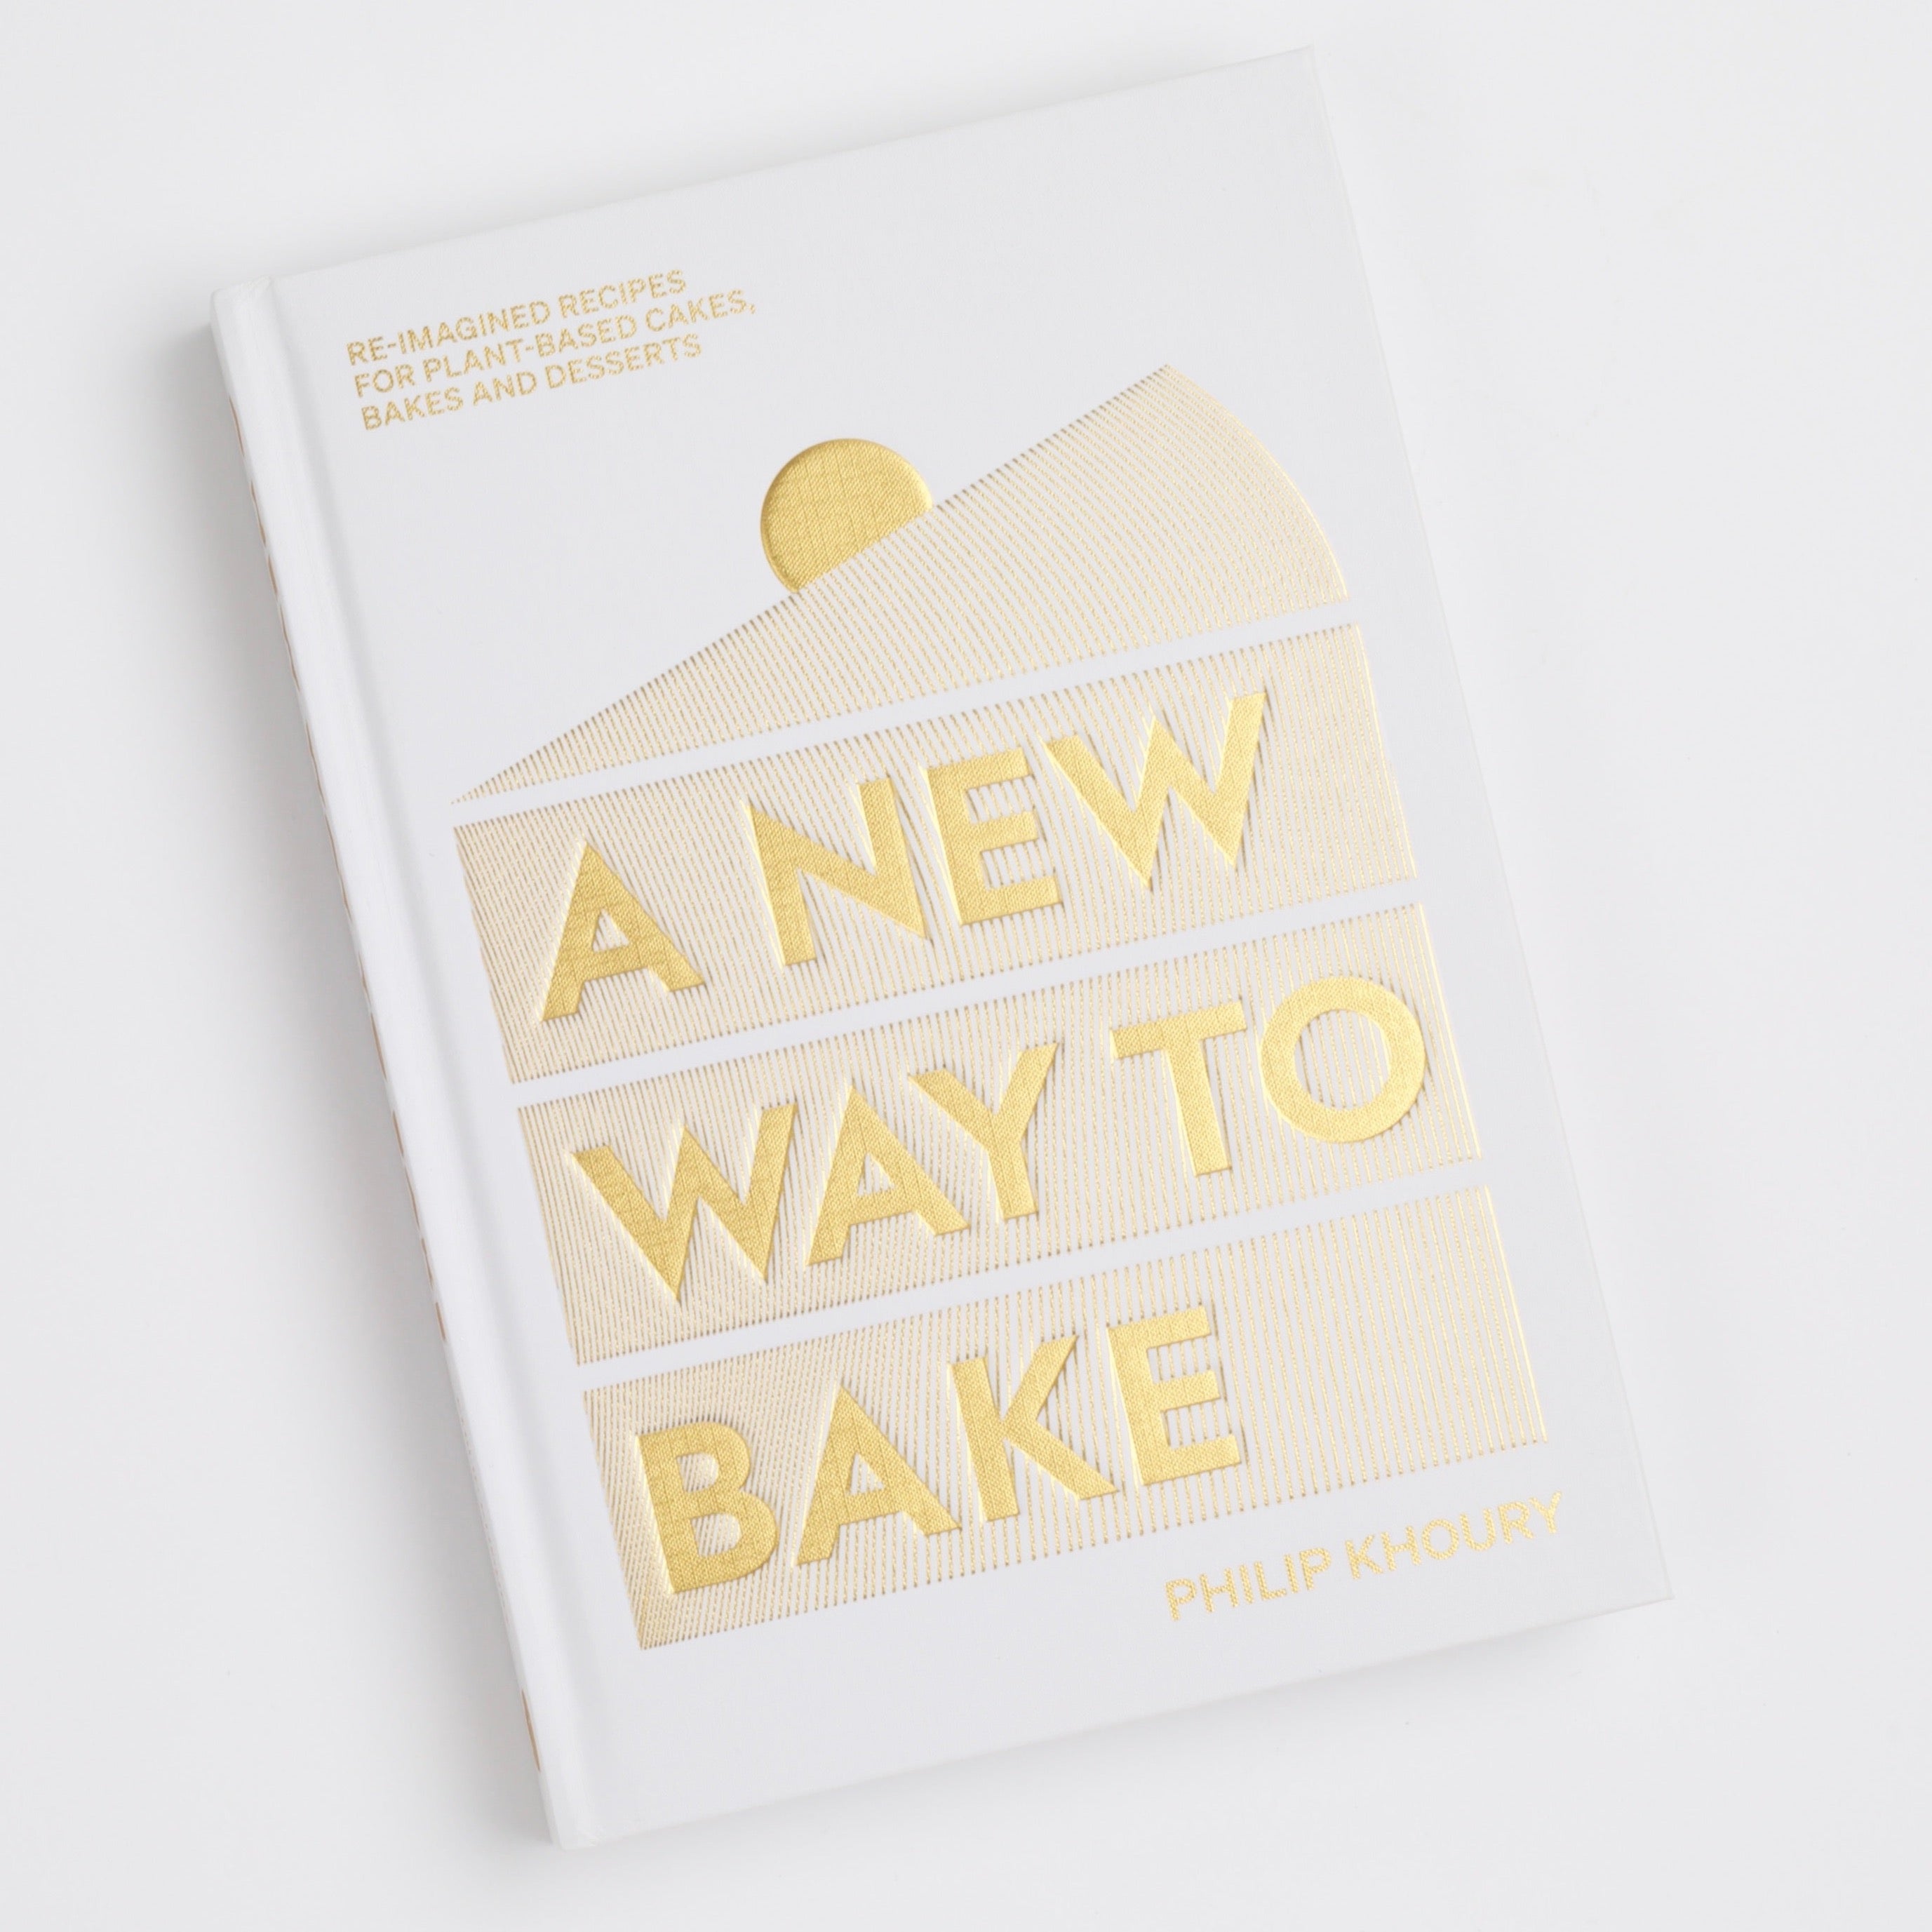 Gold foil cover of Baking Cookbook